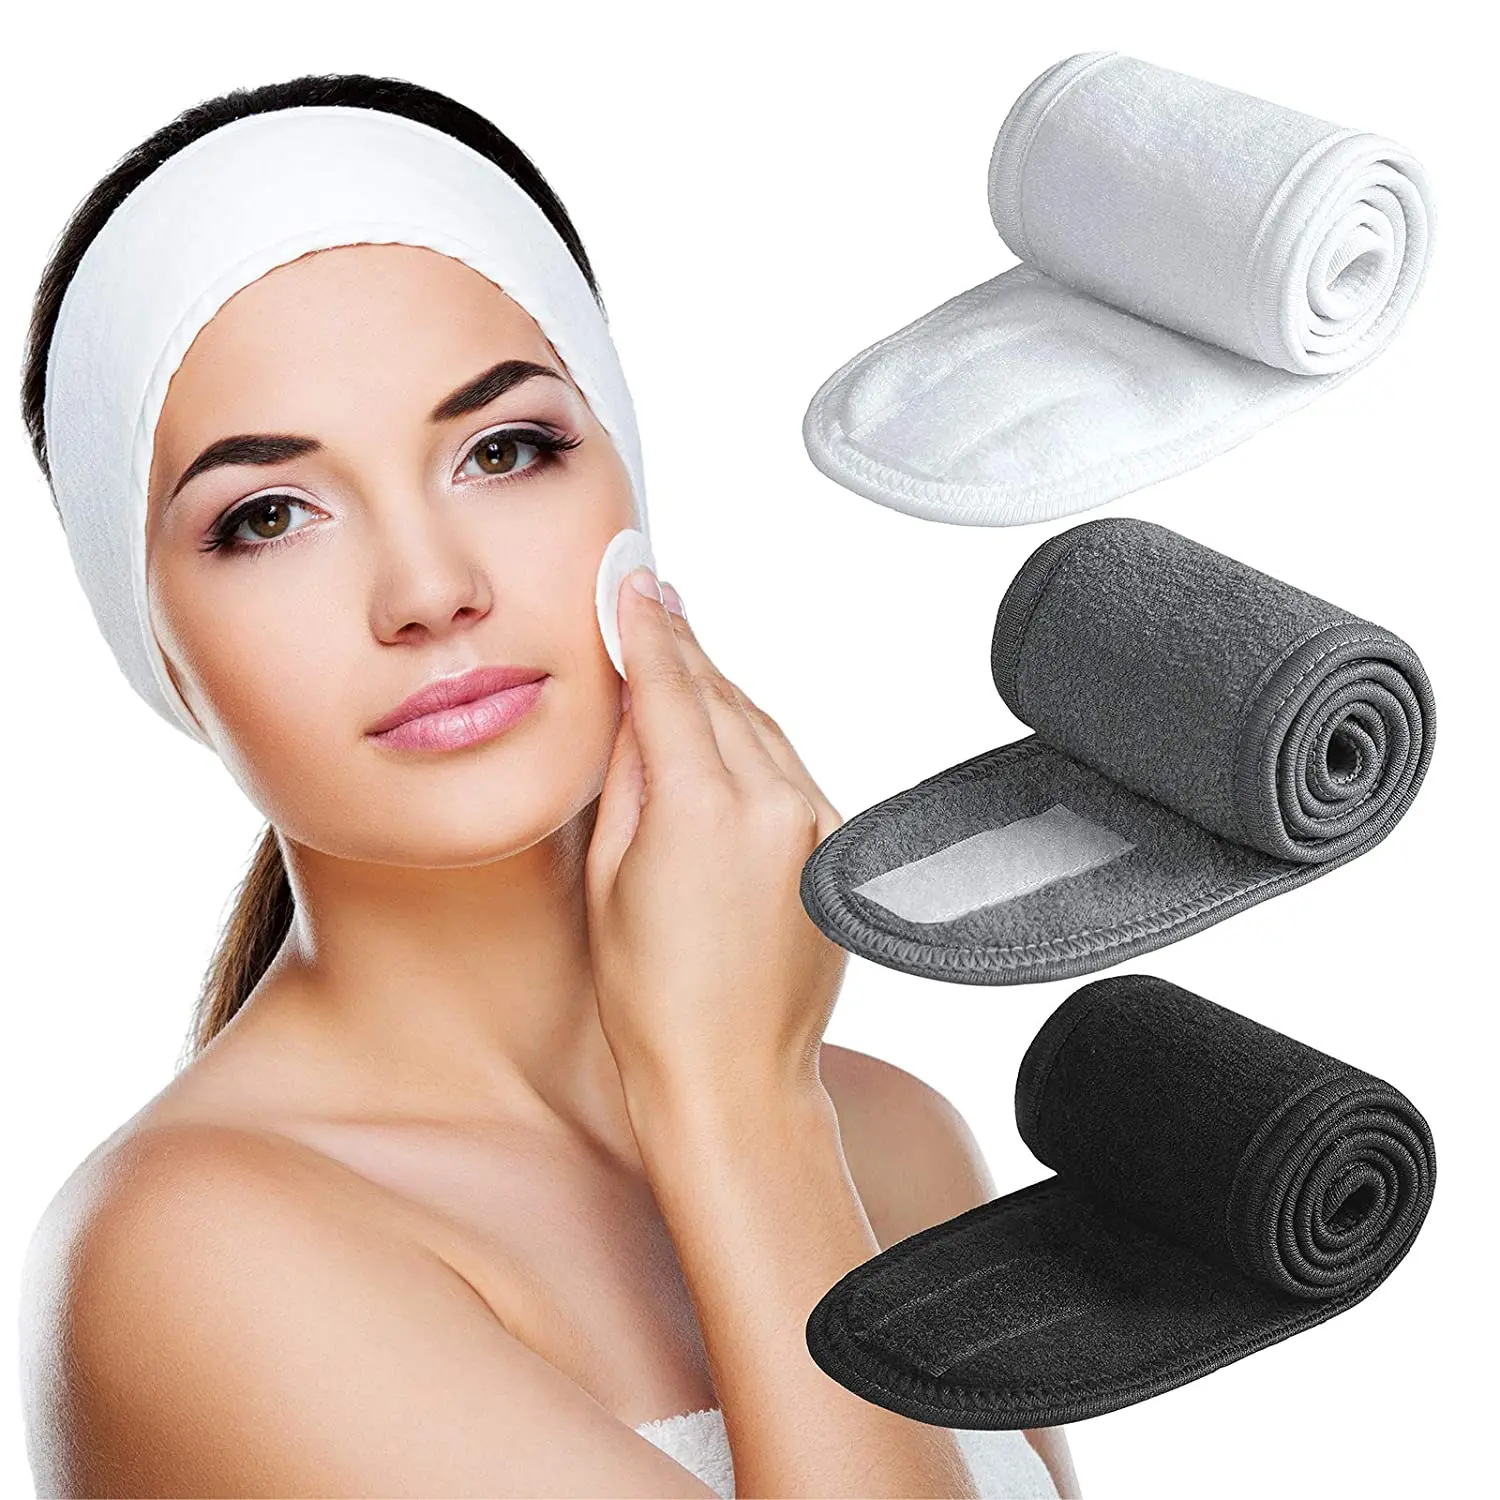 Spa Headband - 3 Pack Ultra Soft Adjustable Face Wash Headband Terry Cloth Stretch Make Up Wrap for Face Washing, Shower, Yoga штаны для бега uniqlo ultra stretch dry ex